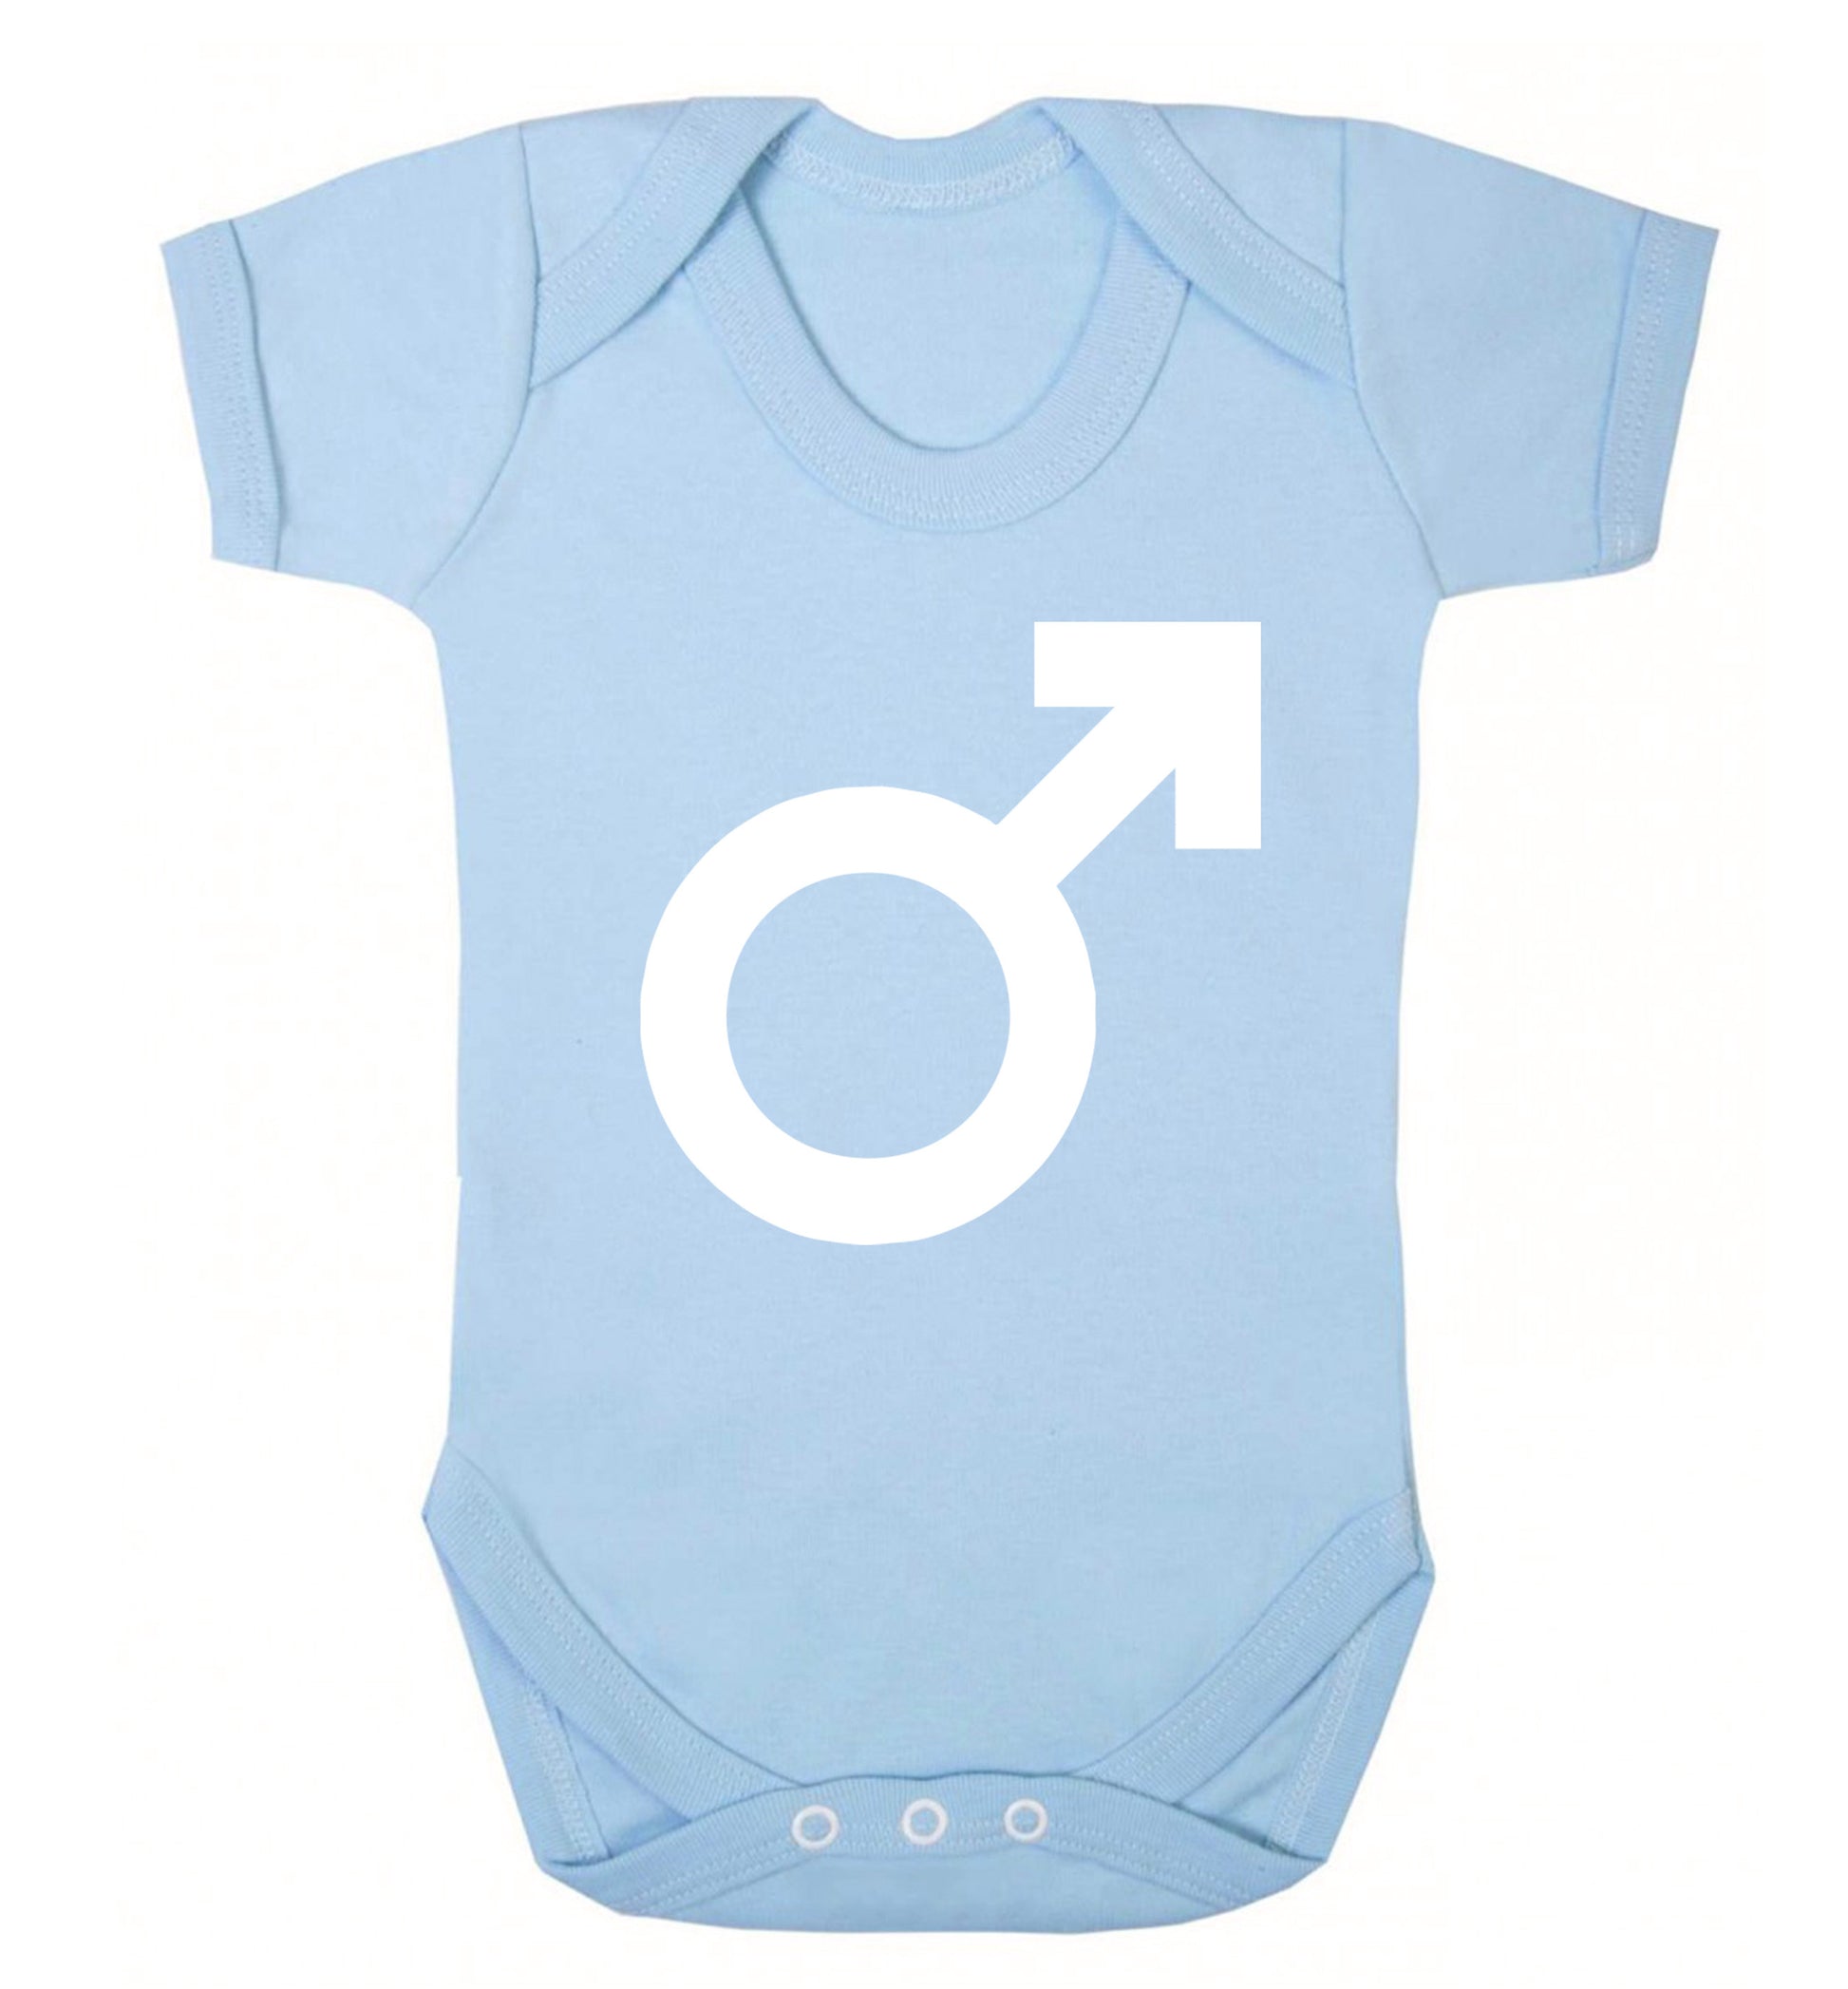 Male symbol large Baby Vest pale blue 18-24 months